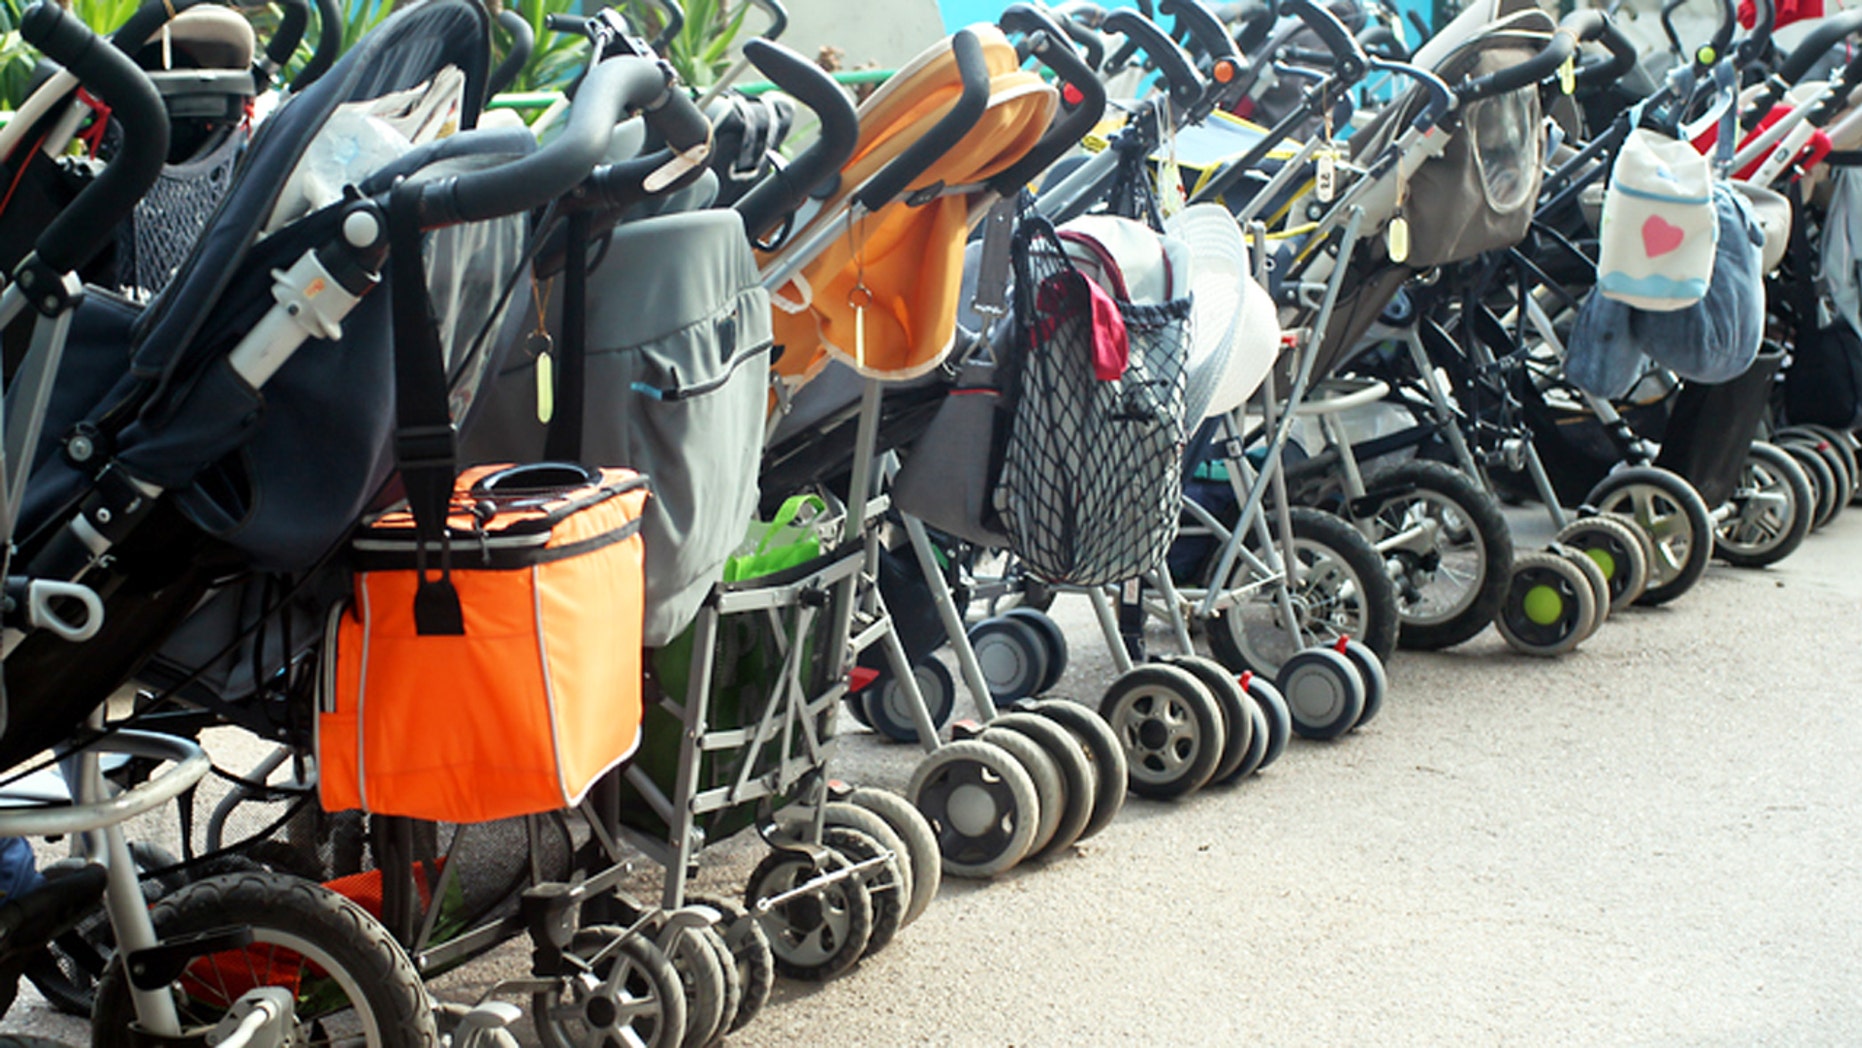 stroller stolen at disney world